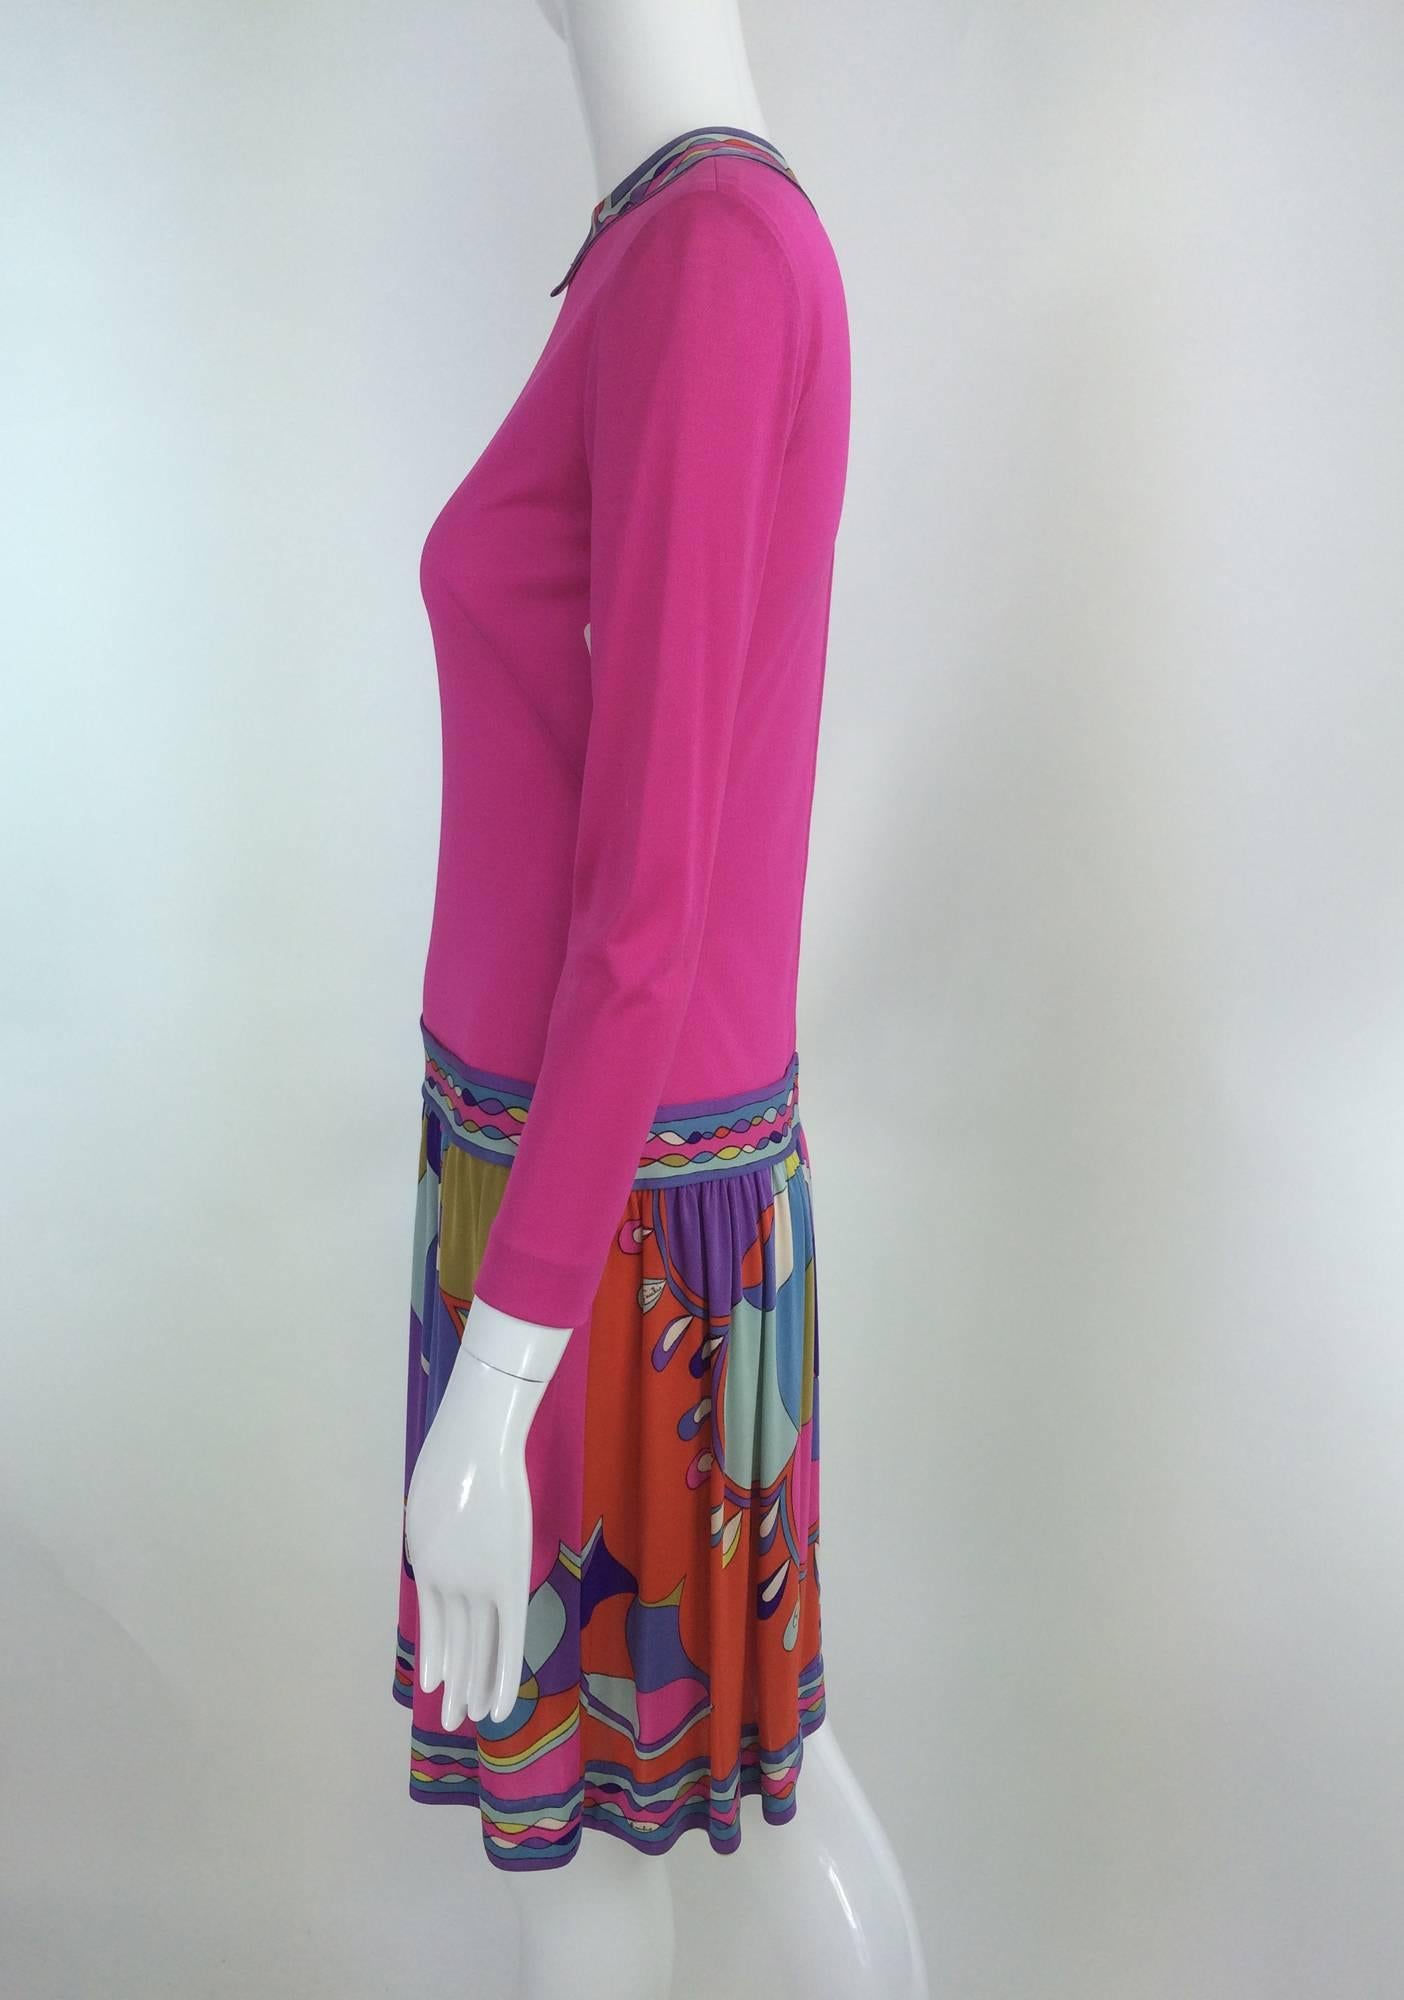 Pucci Mod silk knit dress in hot pink & classic print 1960s 1